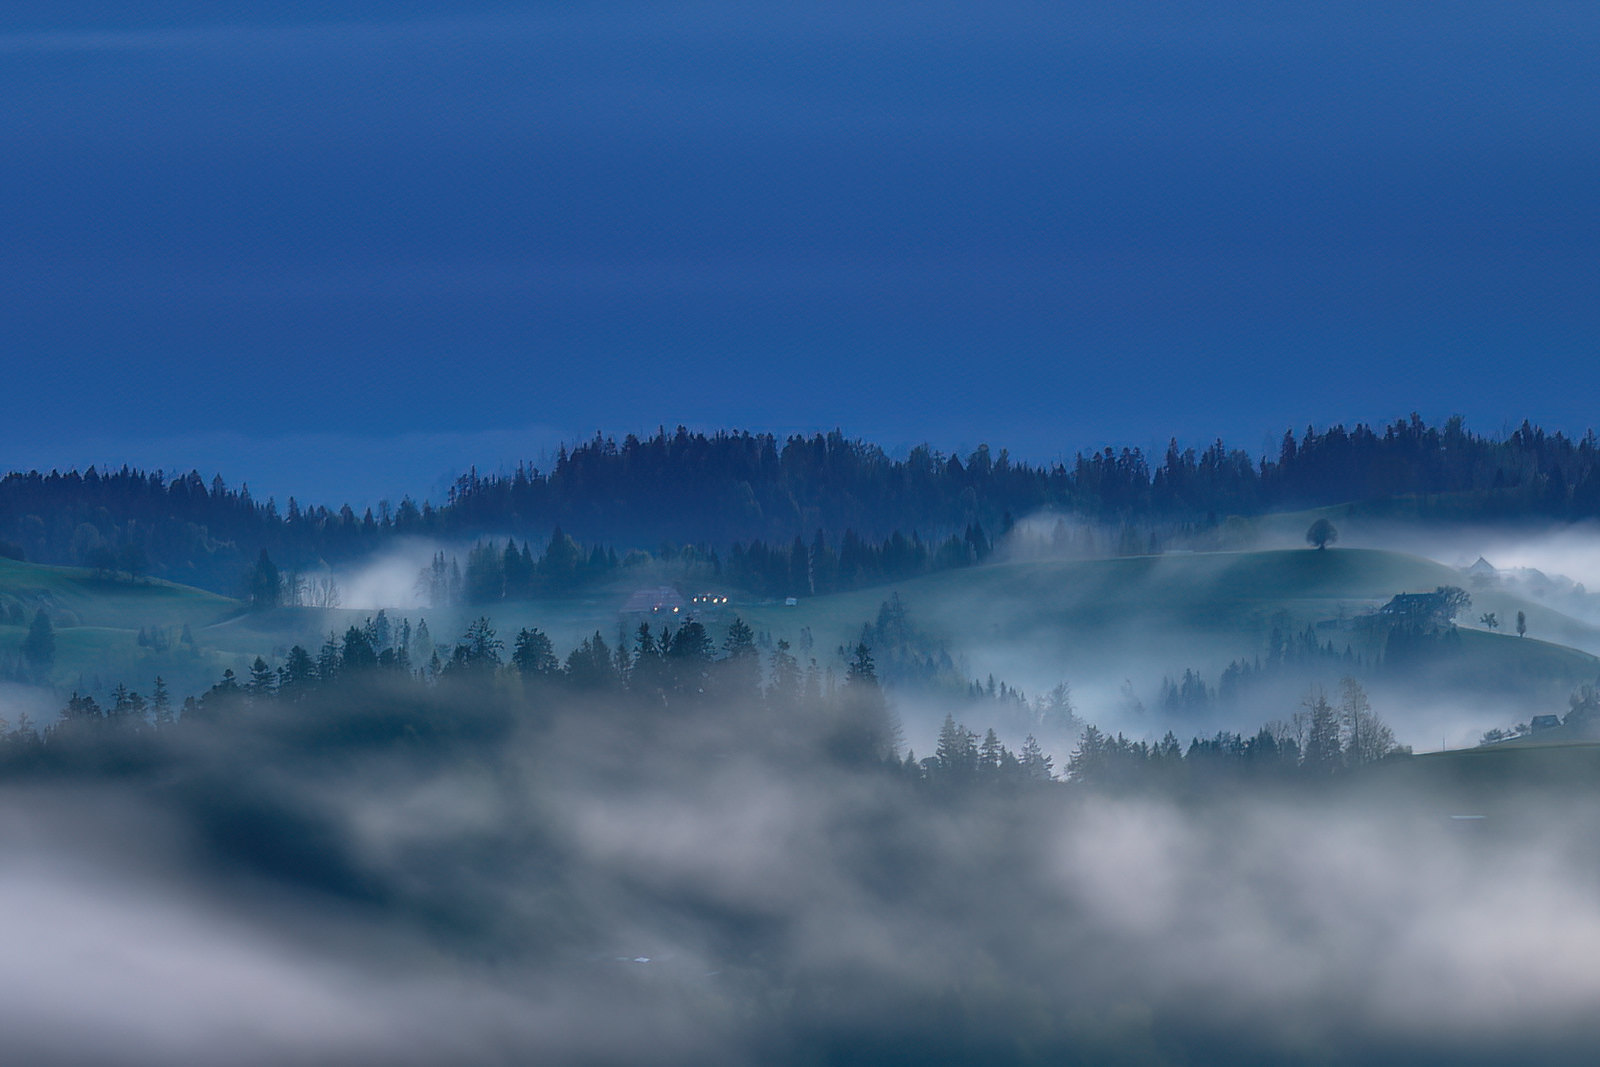 Fog in the hills - Moosegg